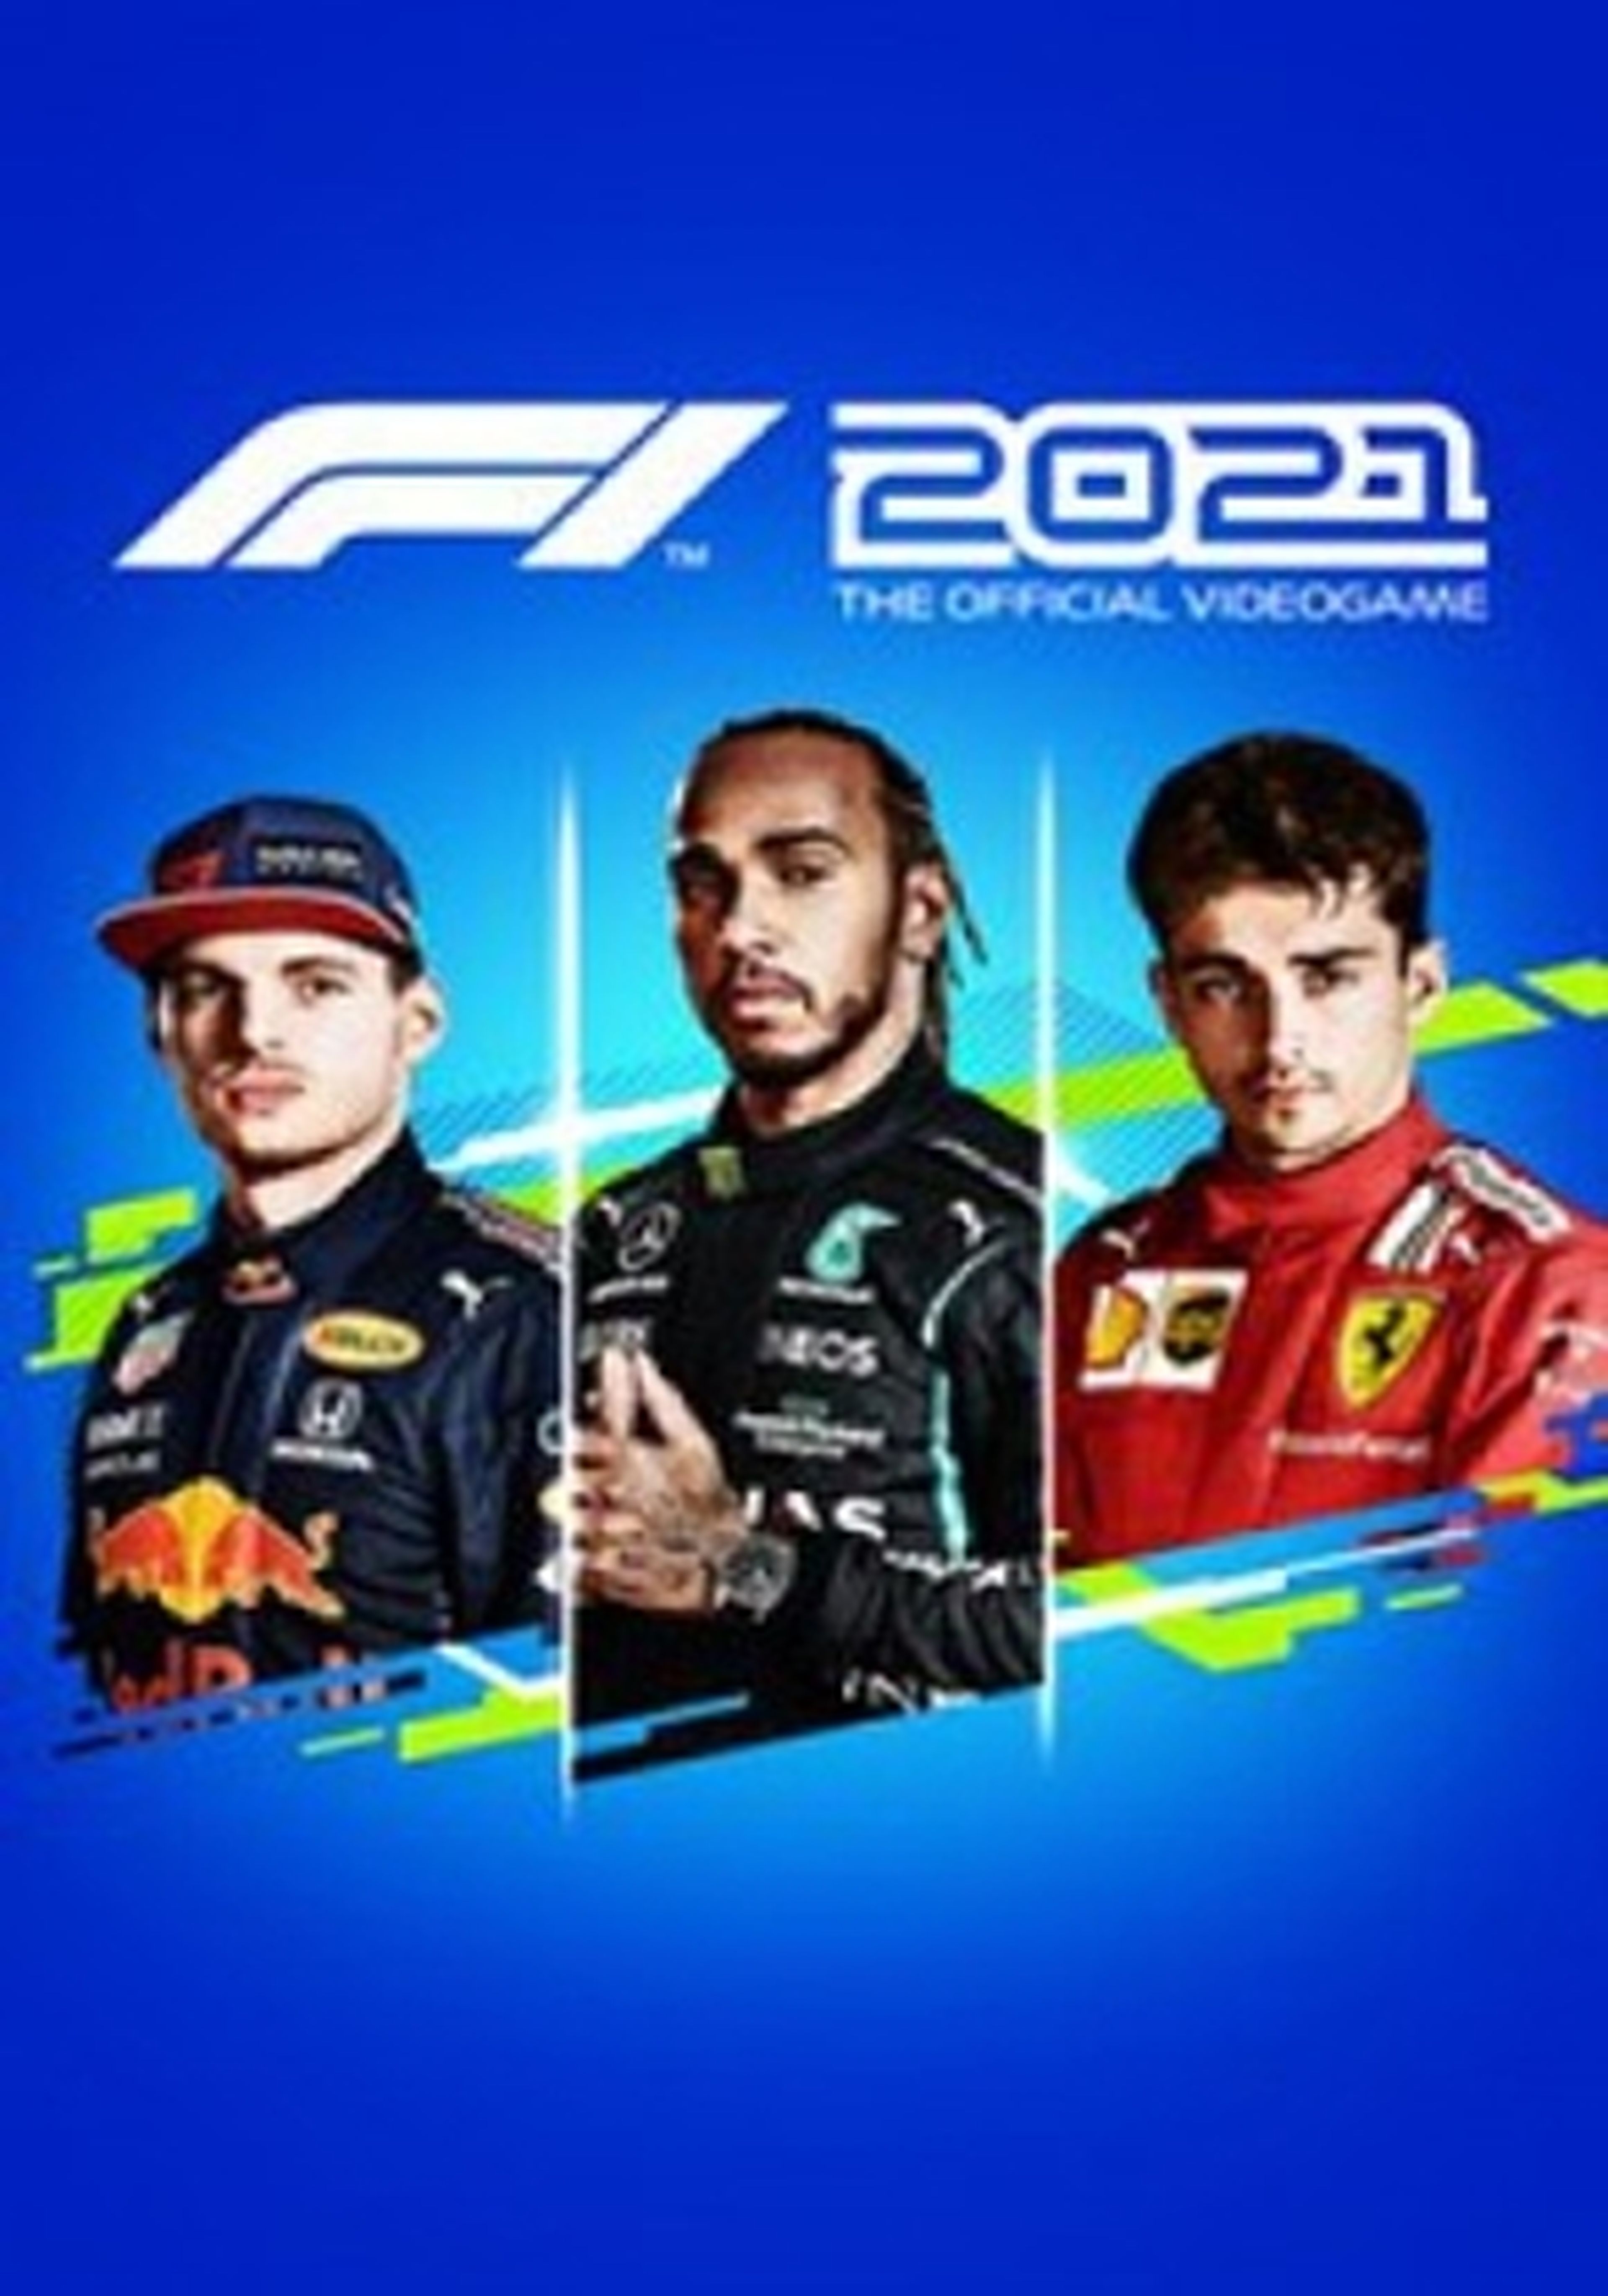 F1 2021 cartel